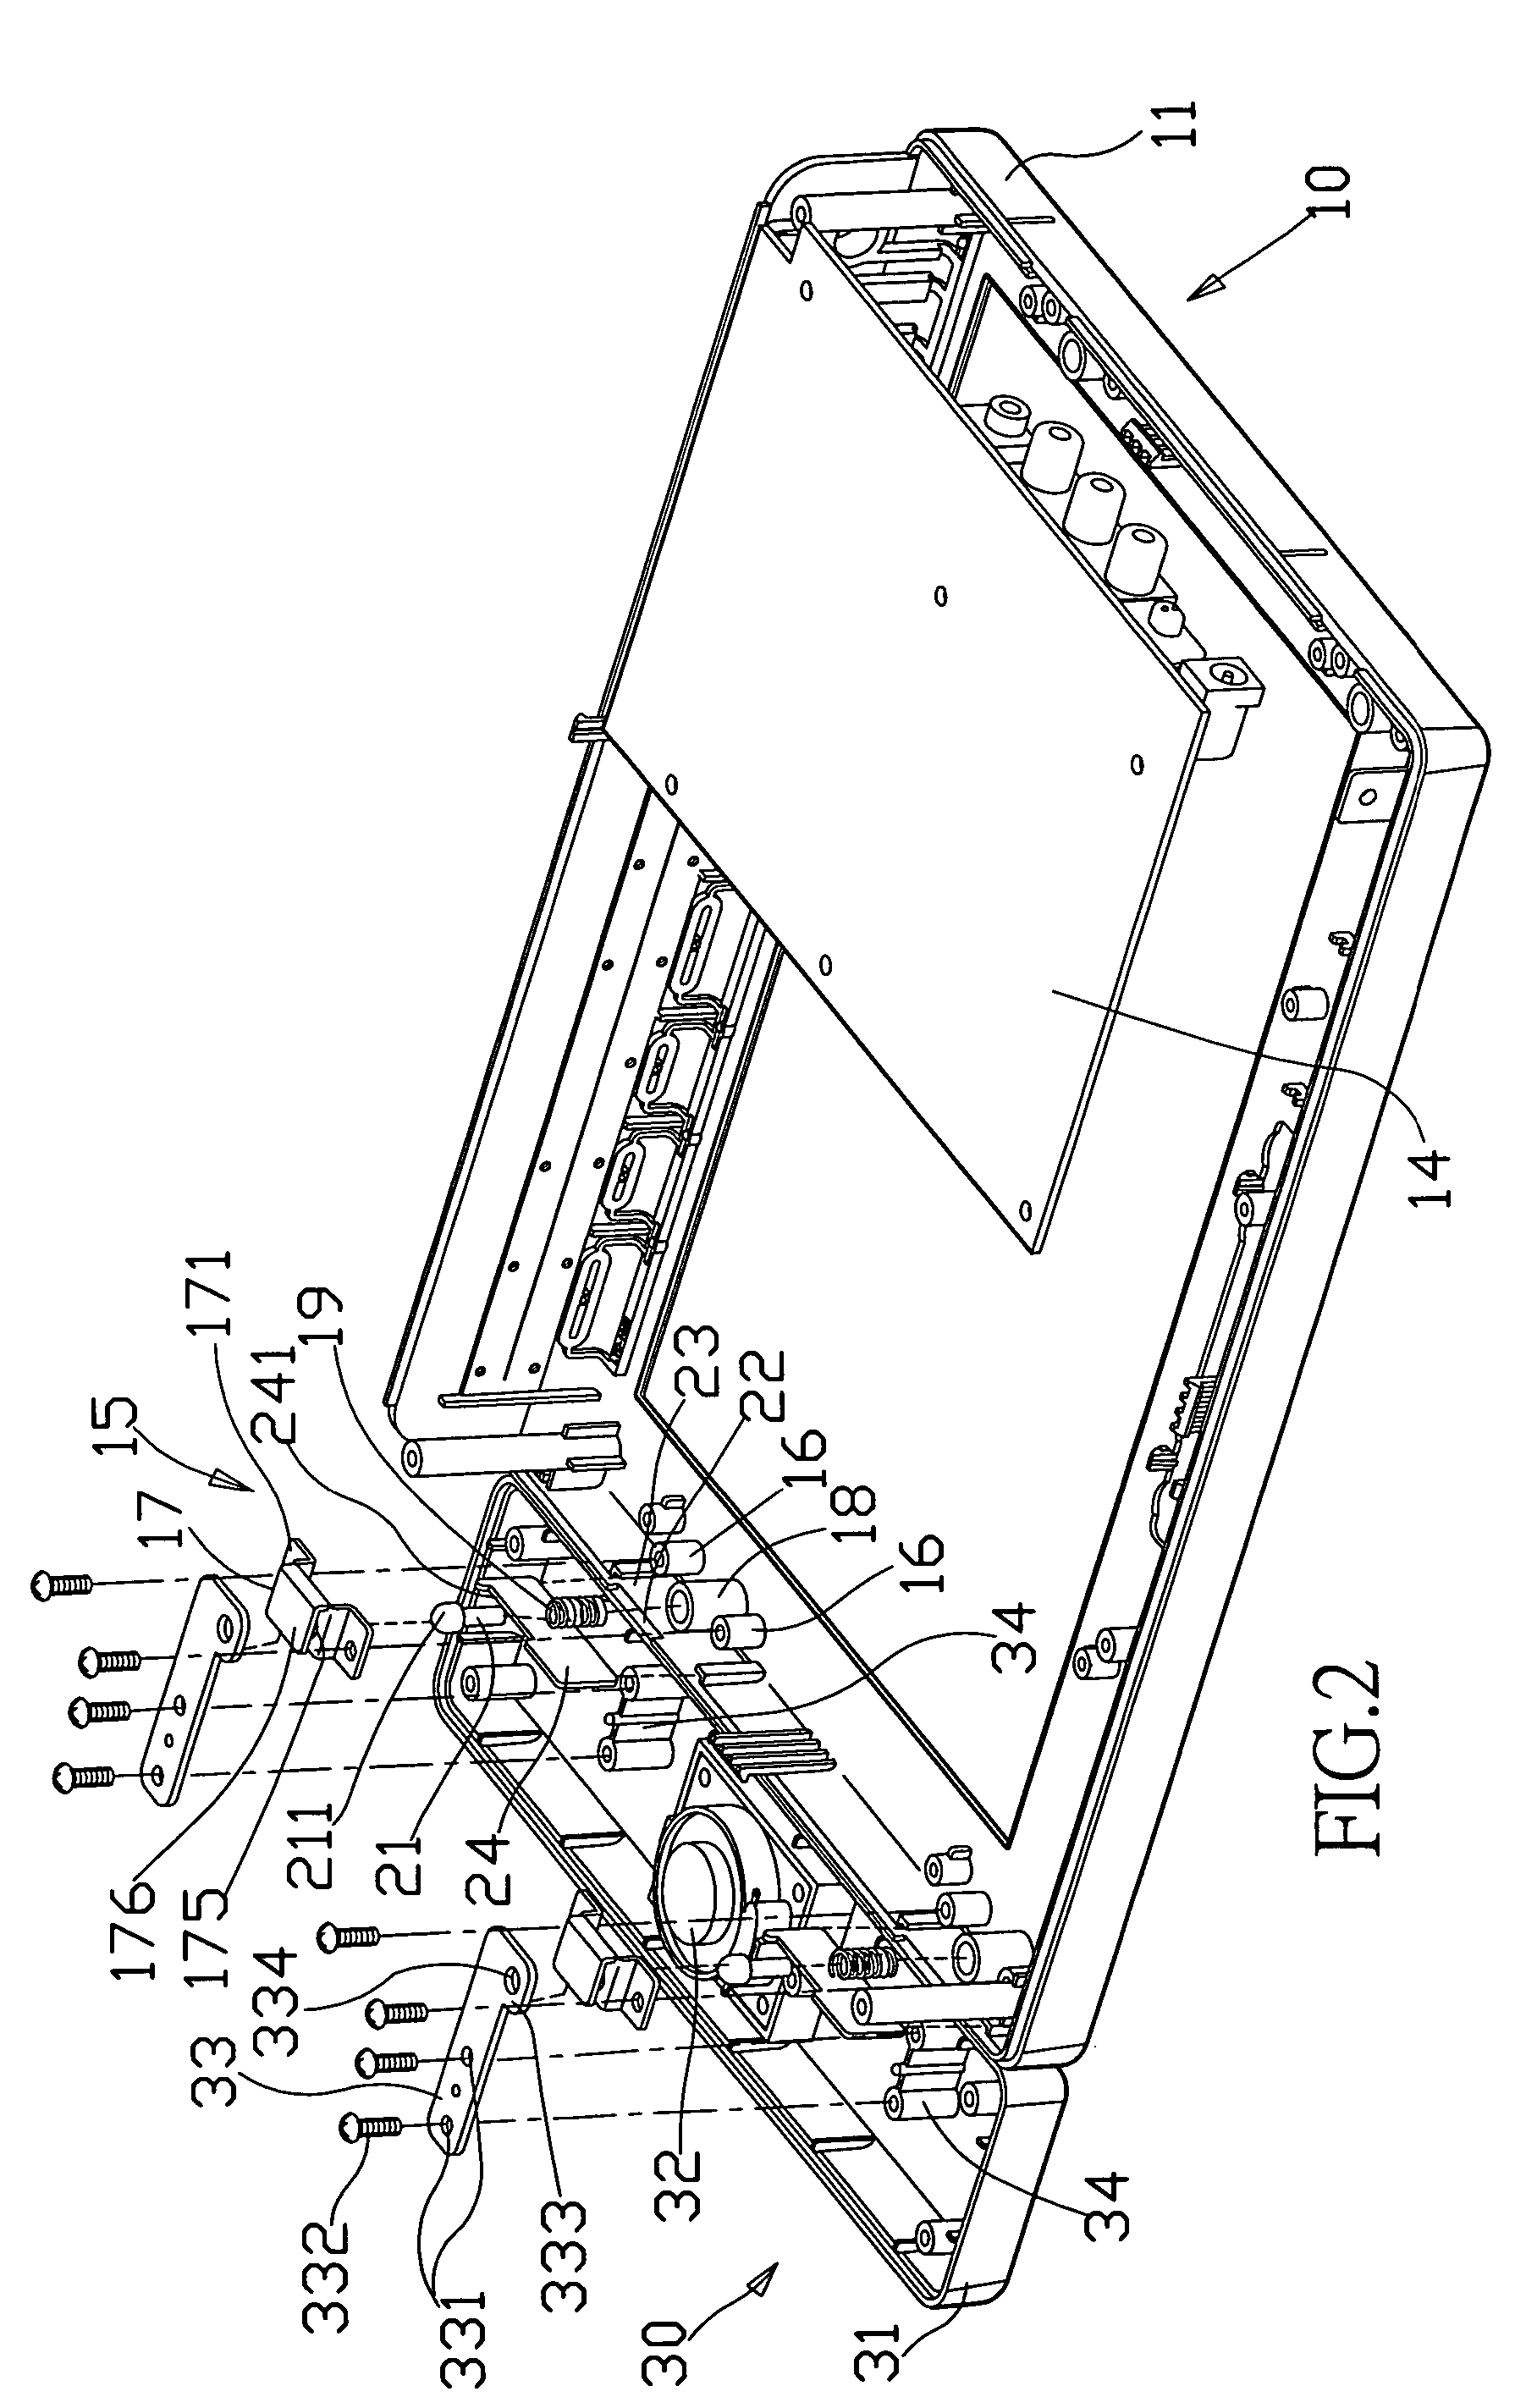 LCD and speaker arrangement